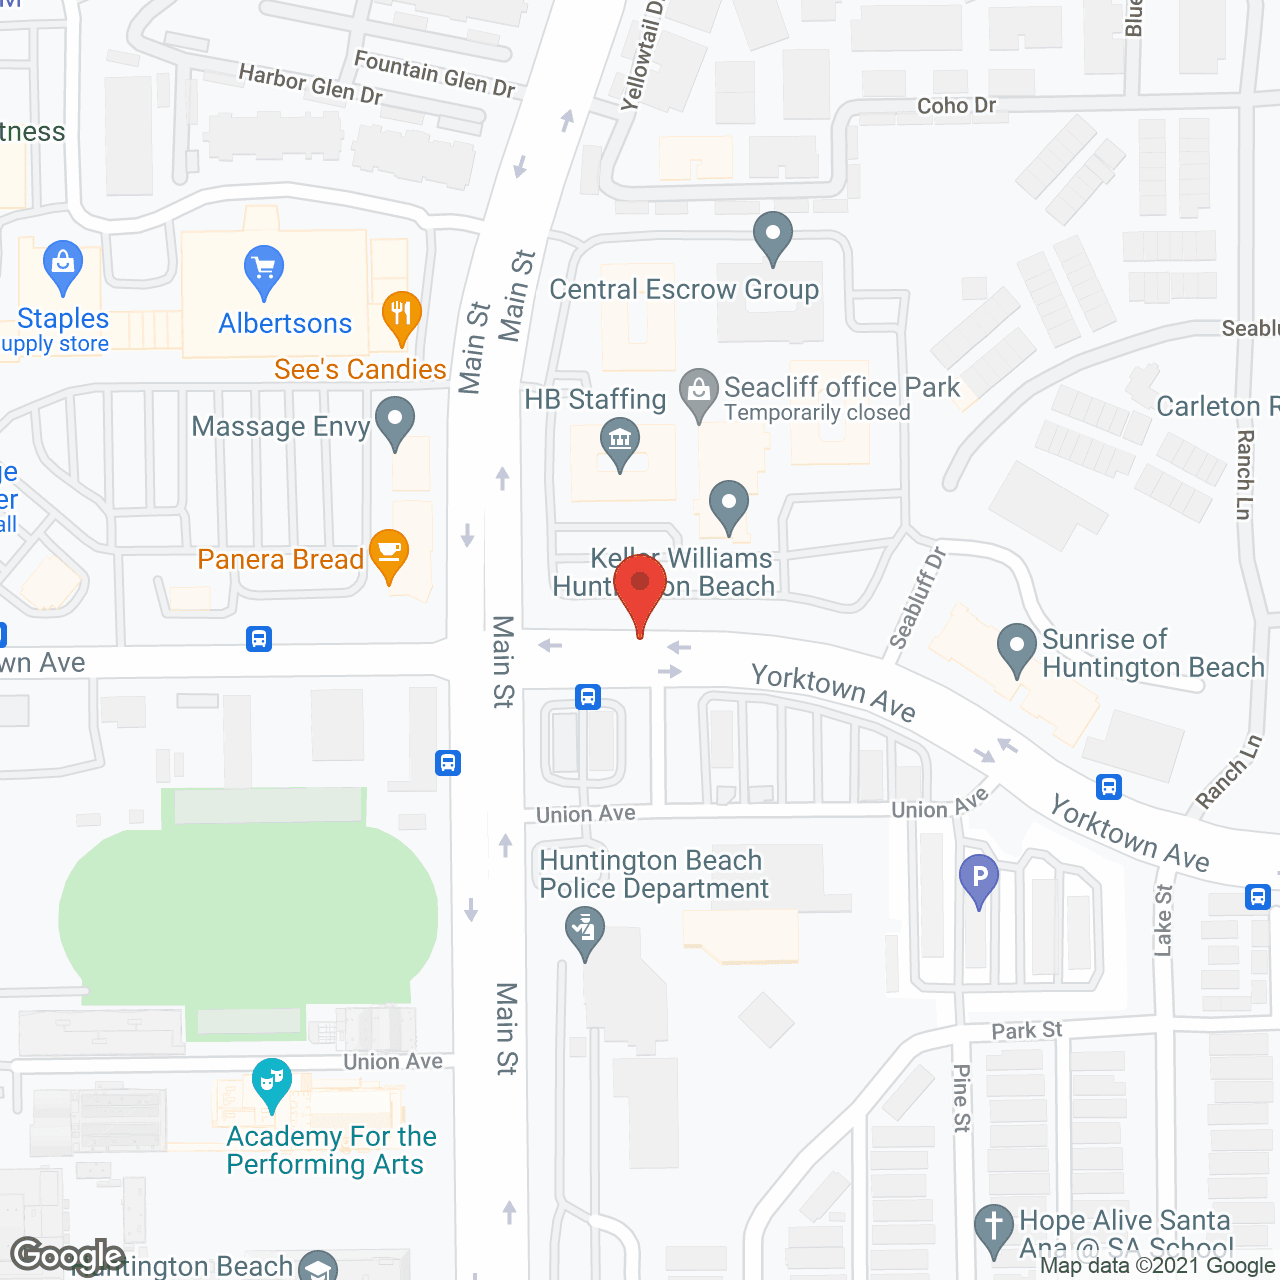 Ivy Park at Huntington Beach in google map